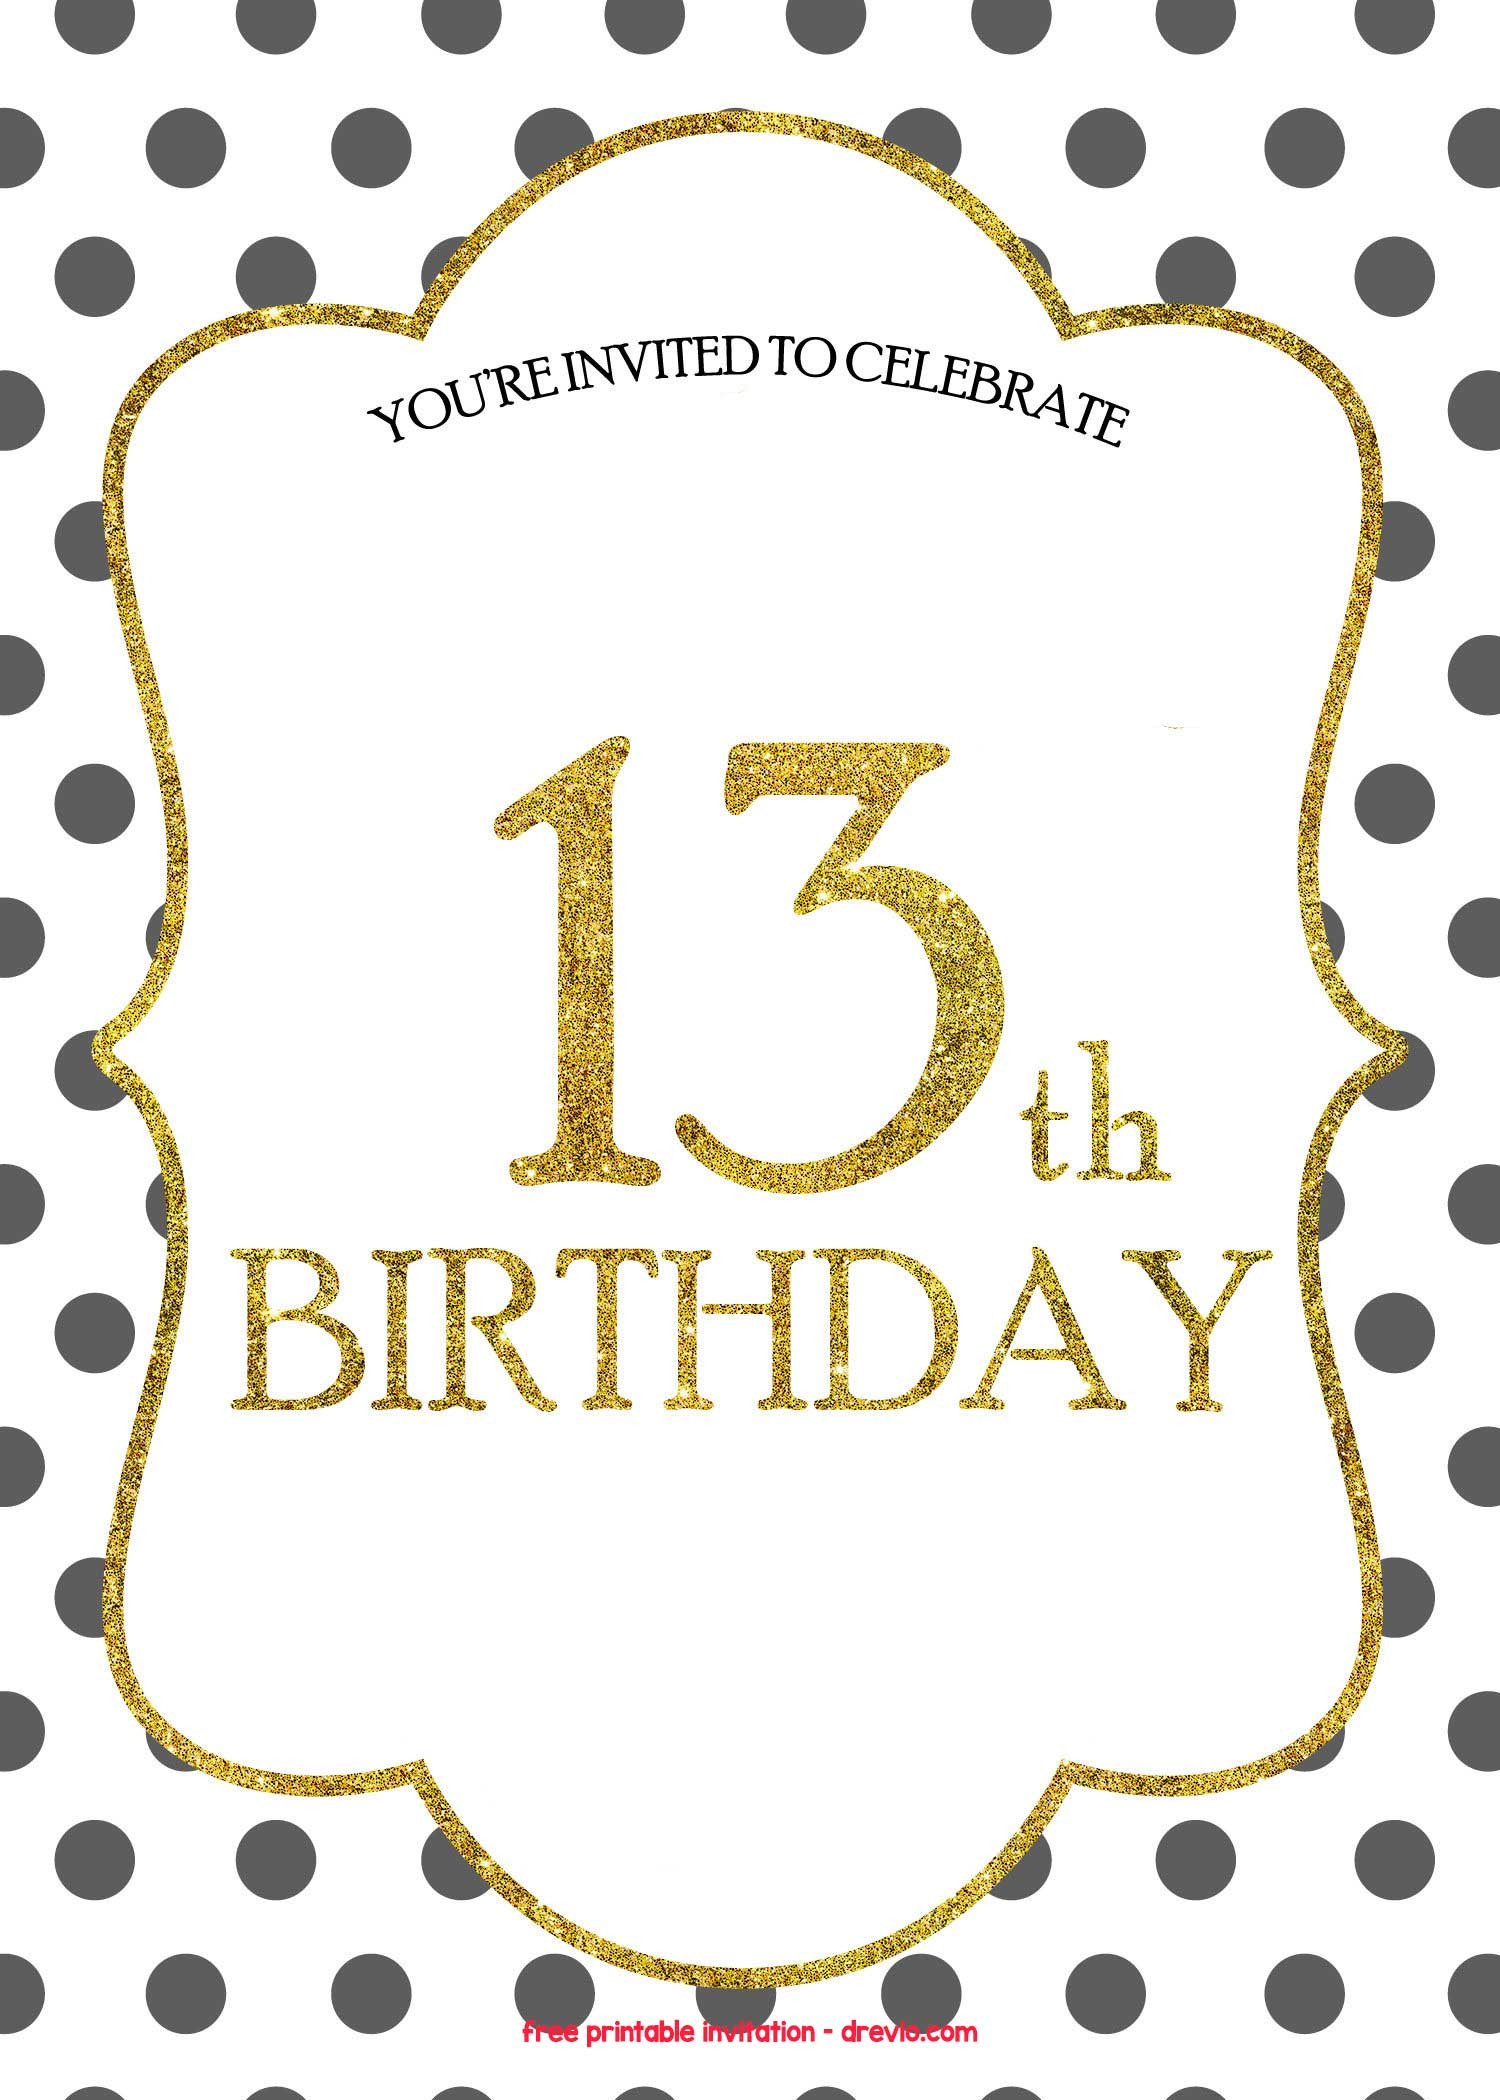 Free Birthday Invitation Template
 FREE 13th Birthday Invitations Templates – FREE PRINTABLE